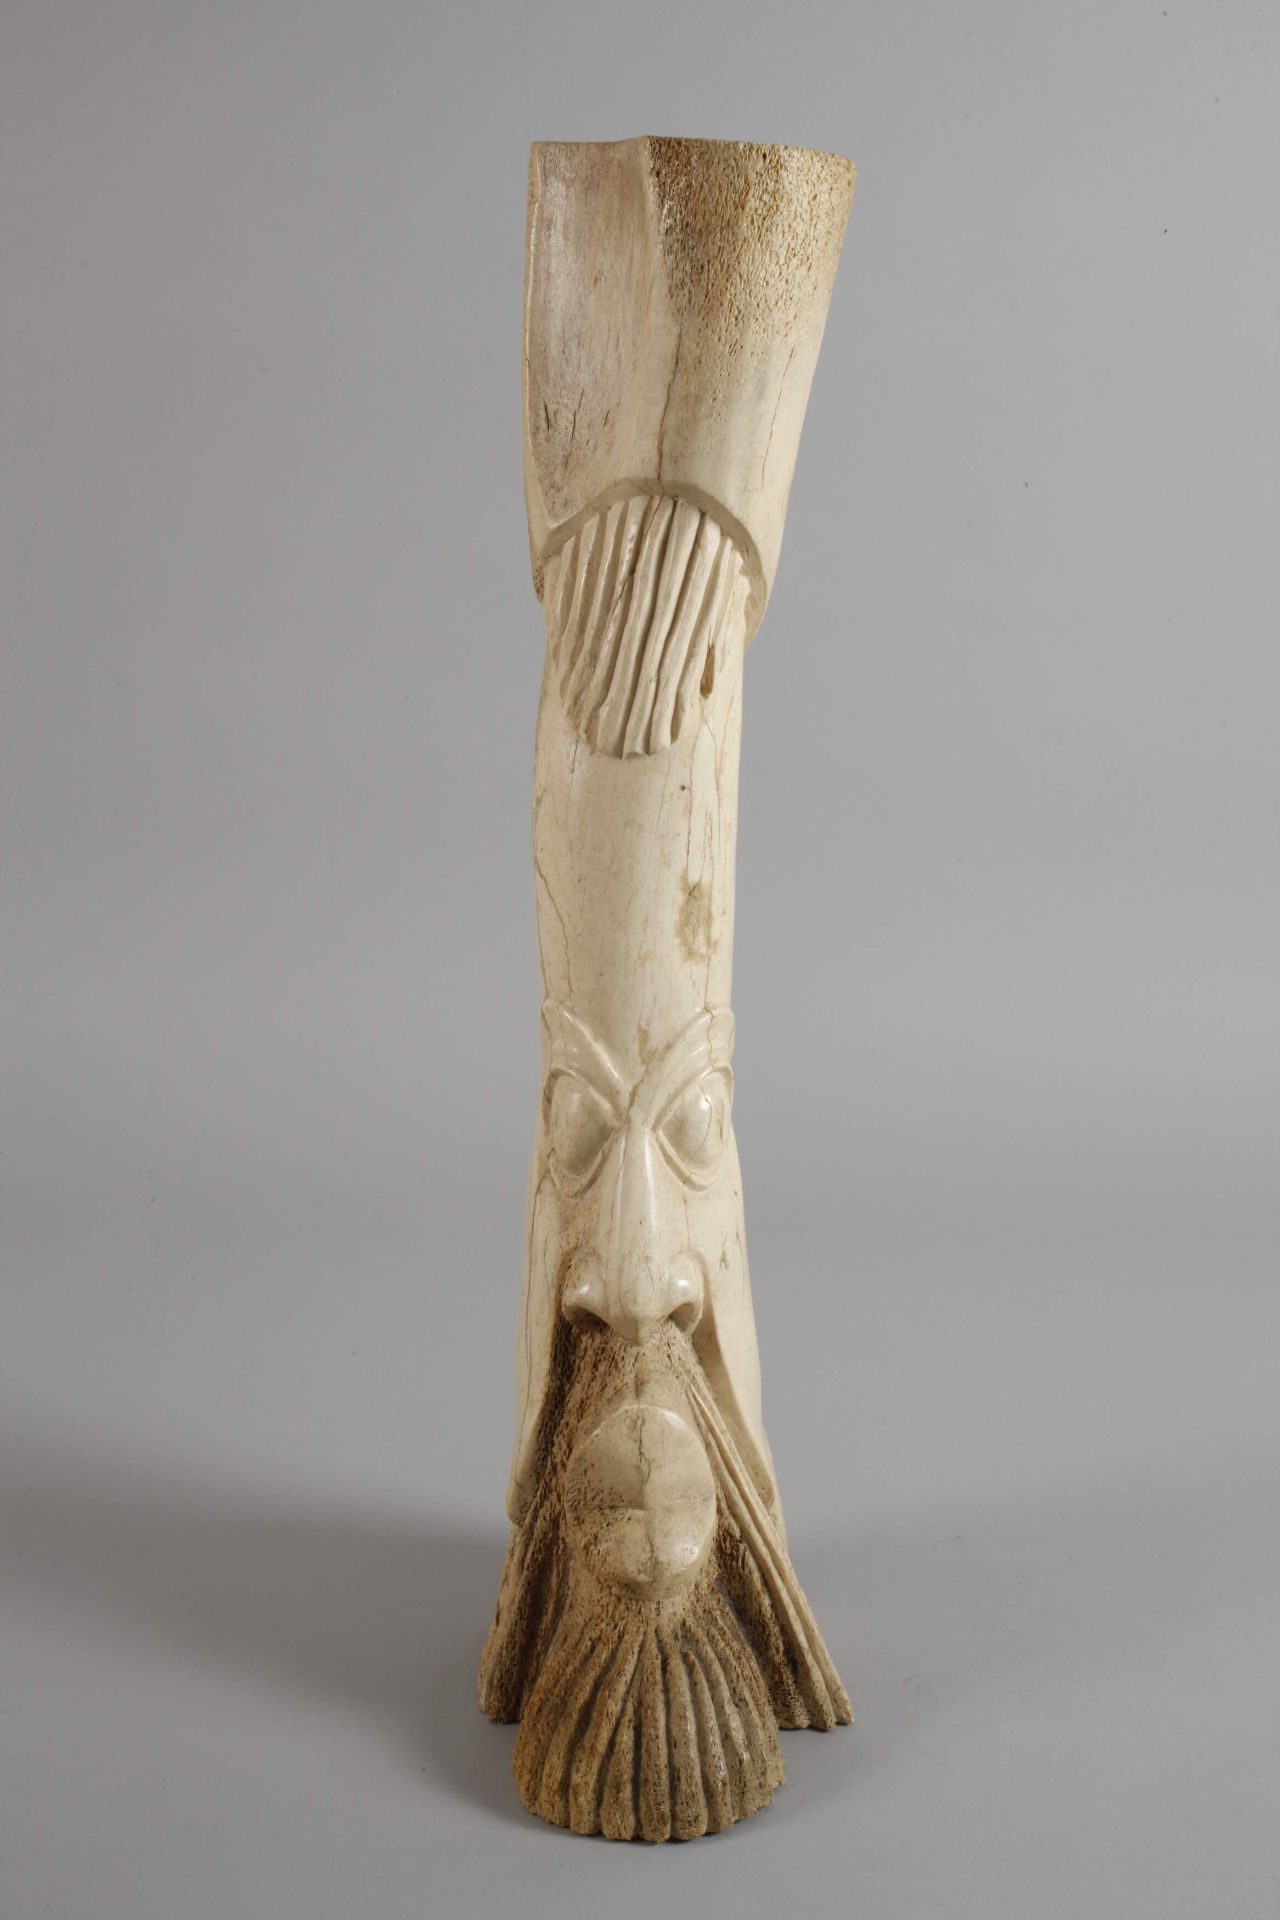 Large bone carving - Image 2 of 6